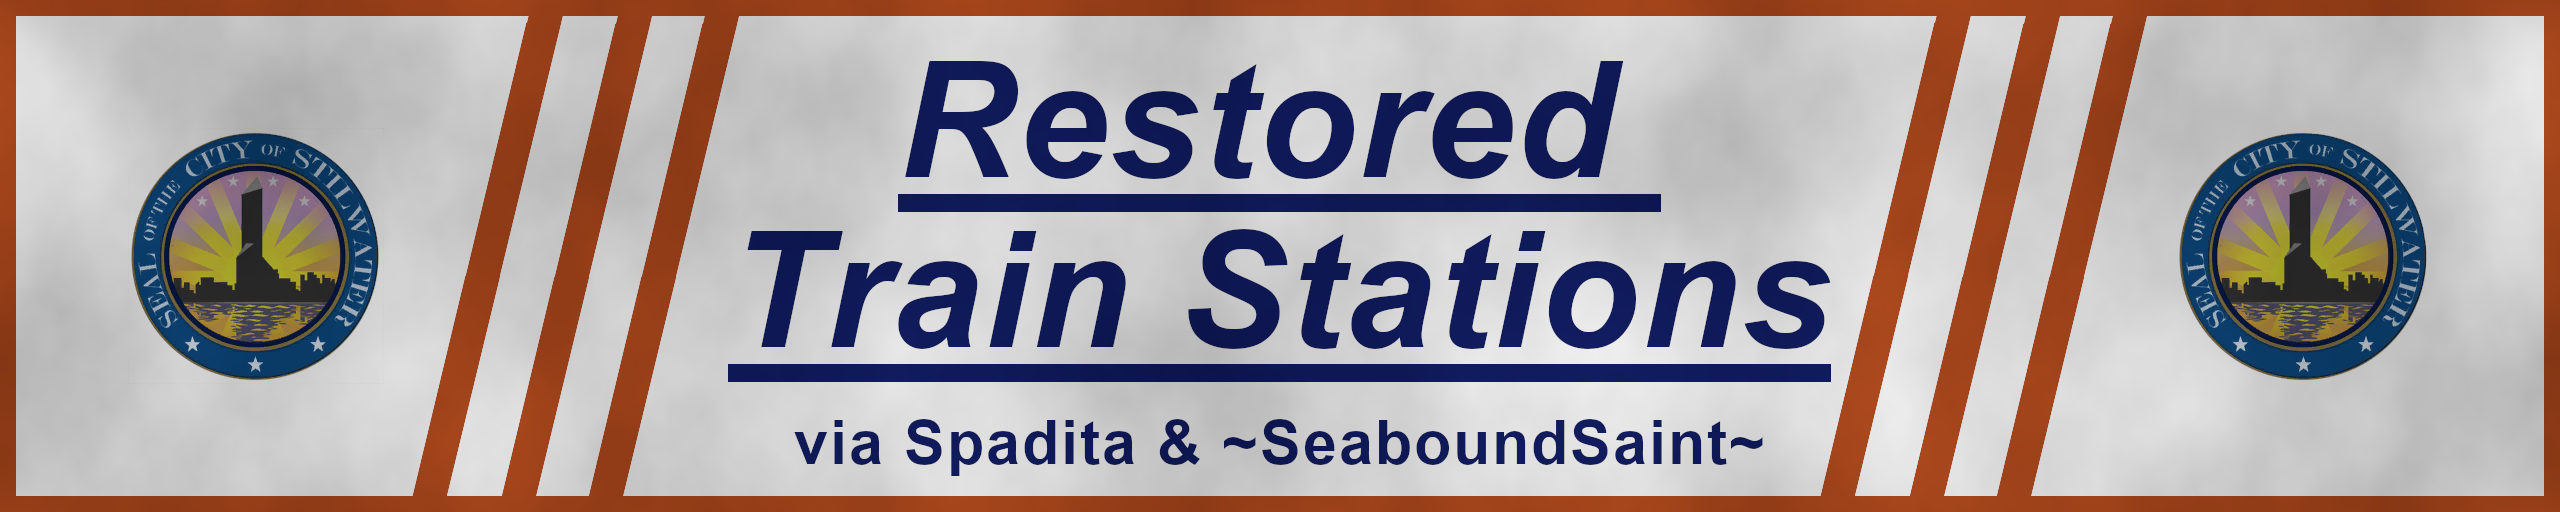 RestoredTrainStations_Banner.png